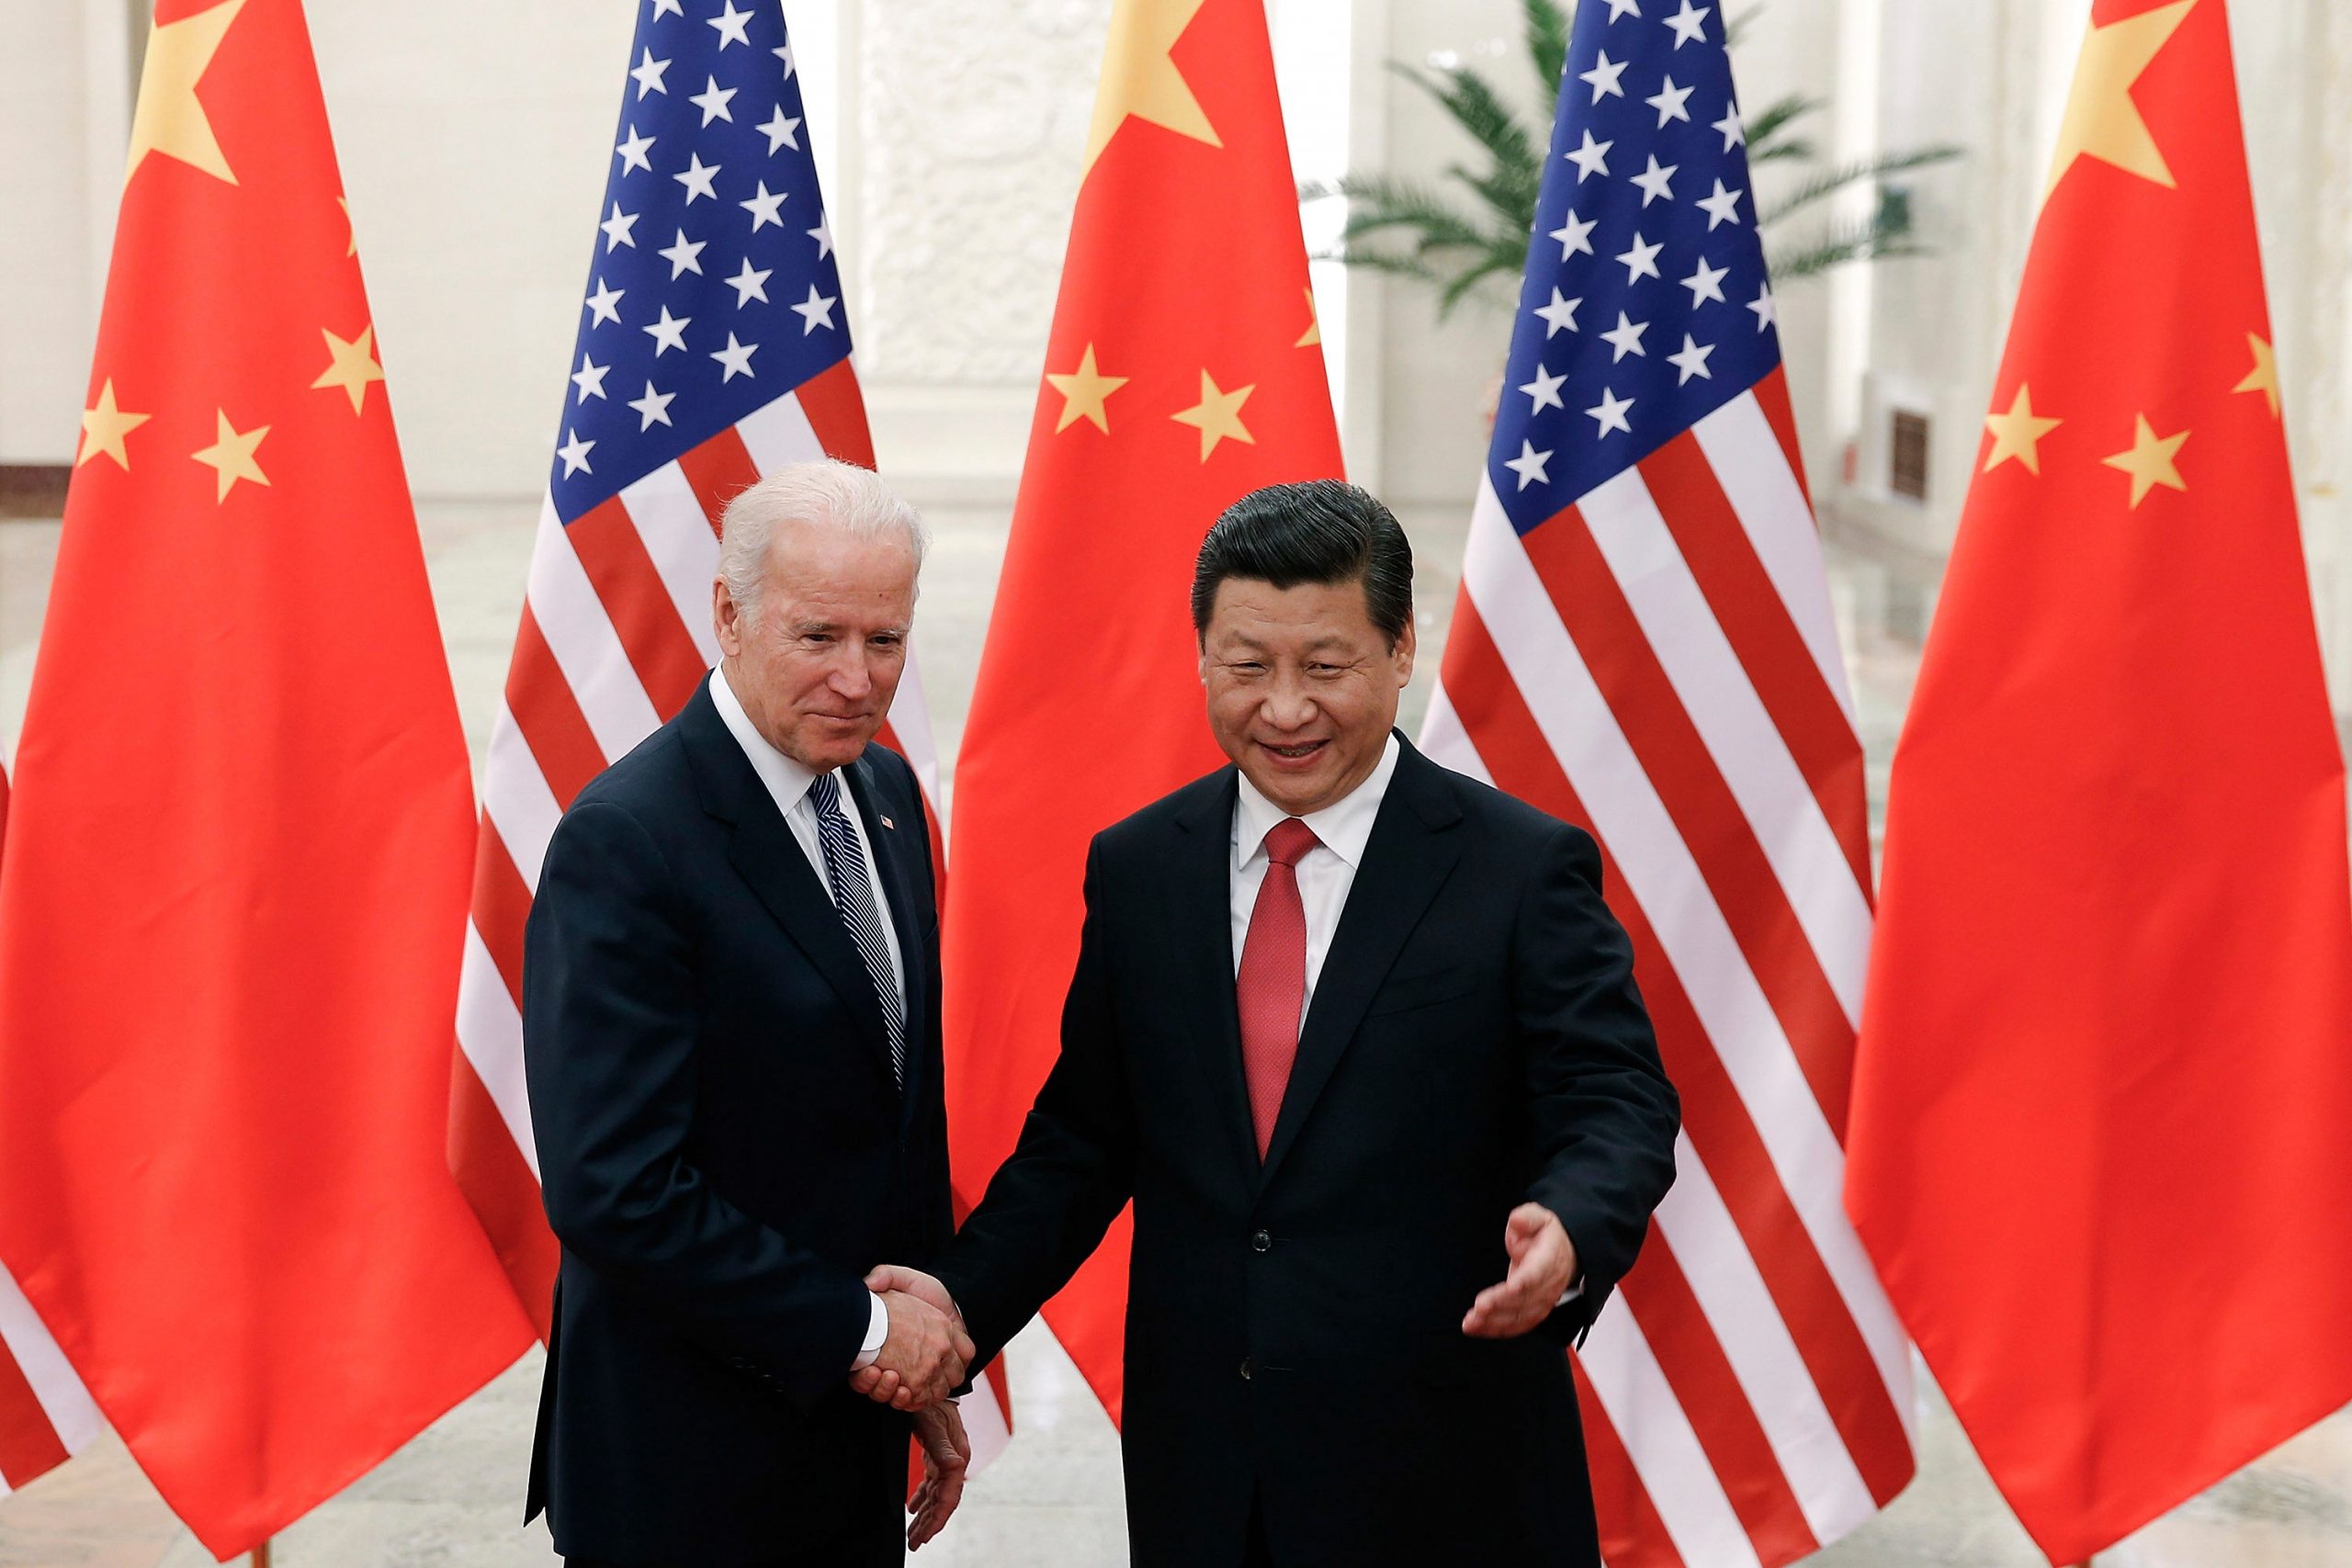 China warns US against imposing democratic ideals after Biden speech